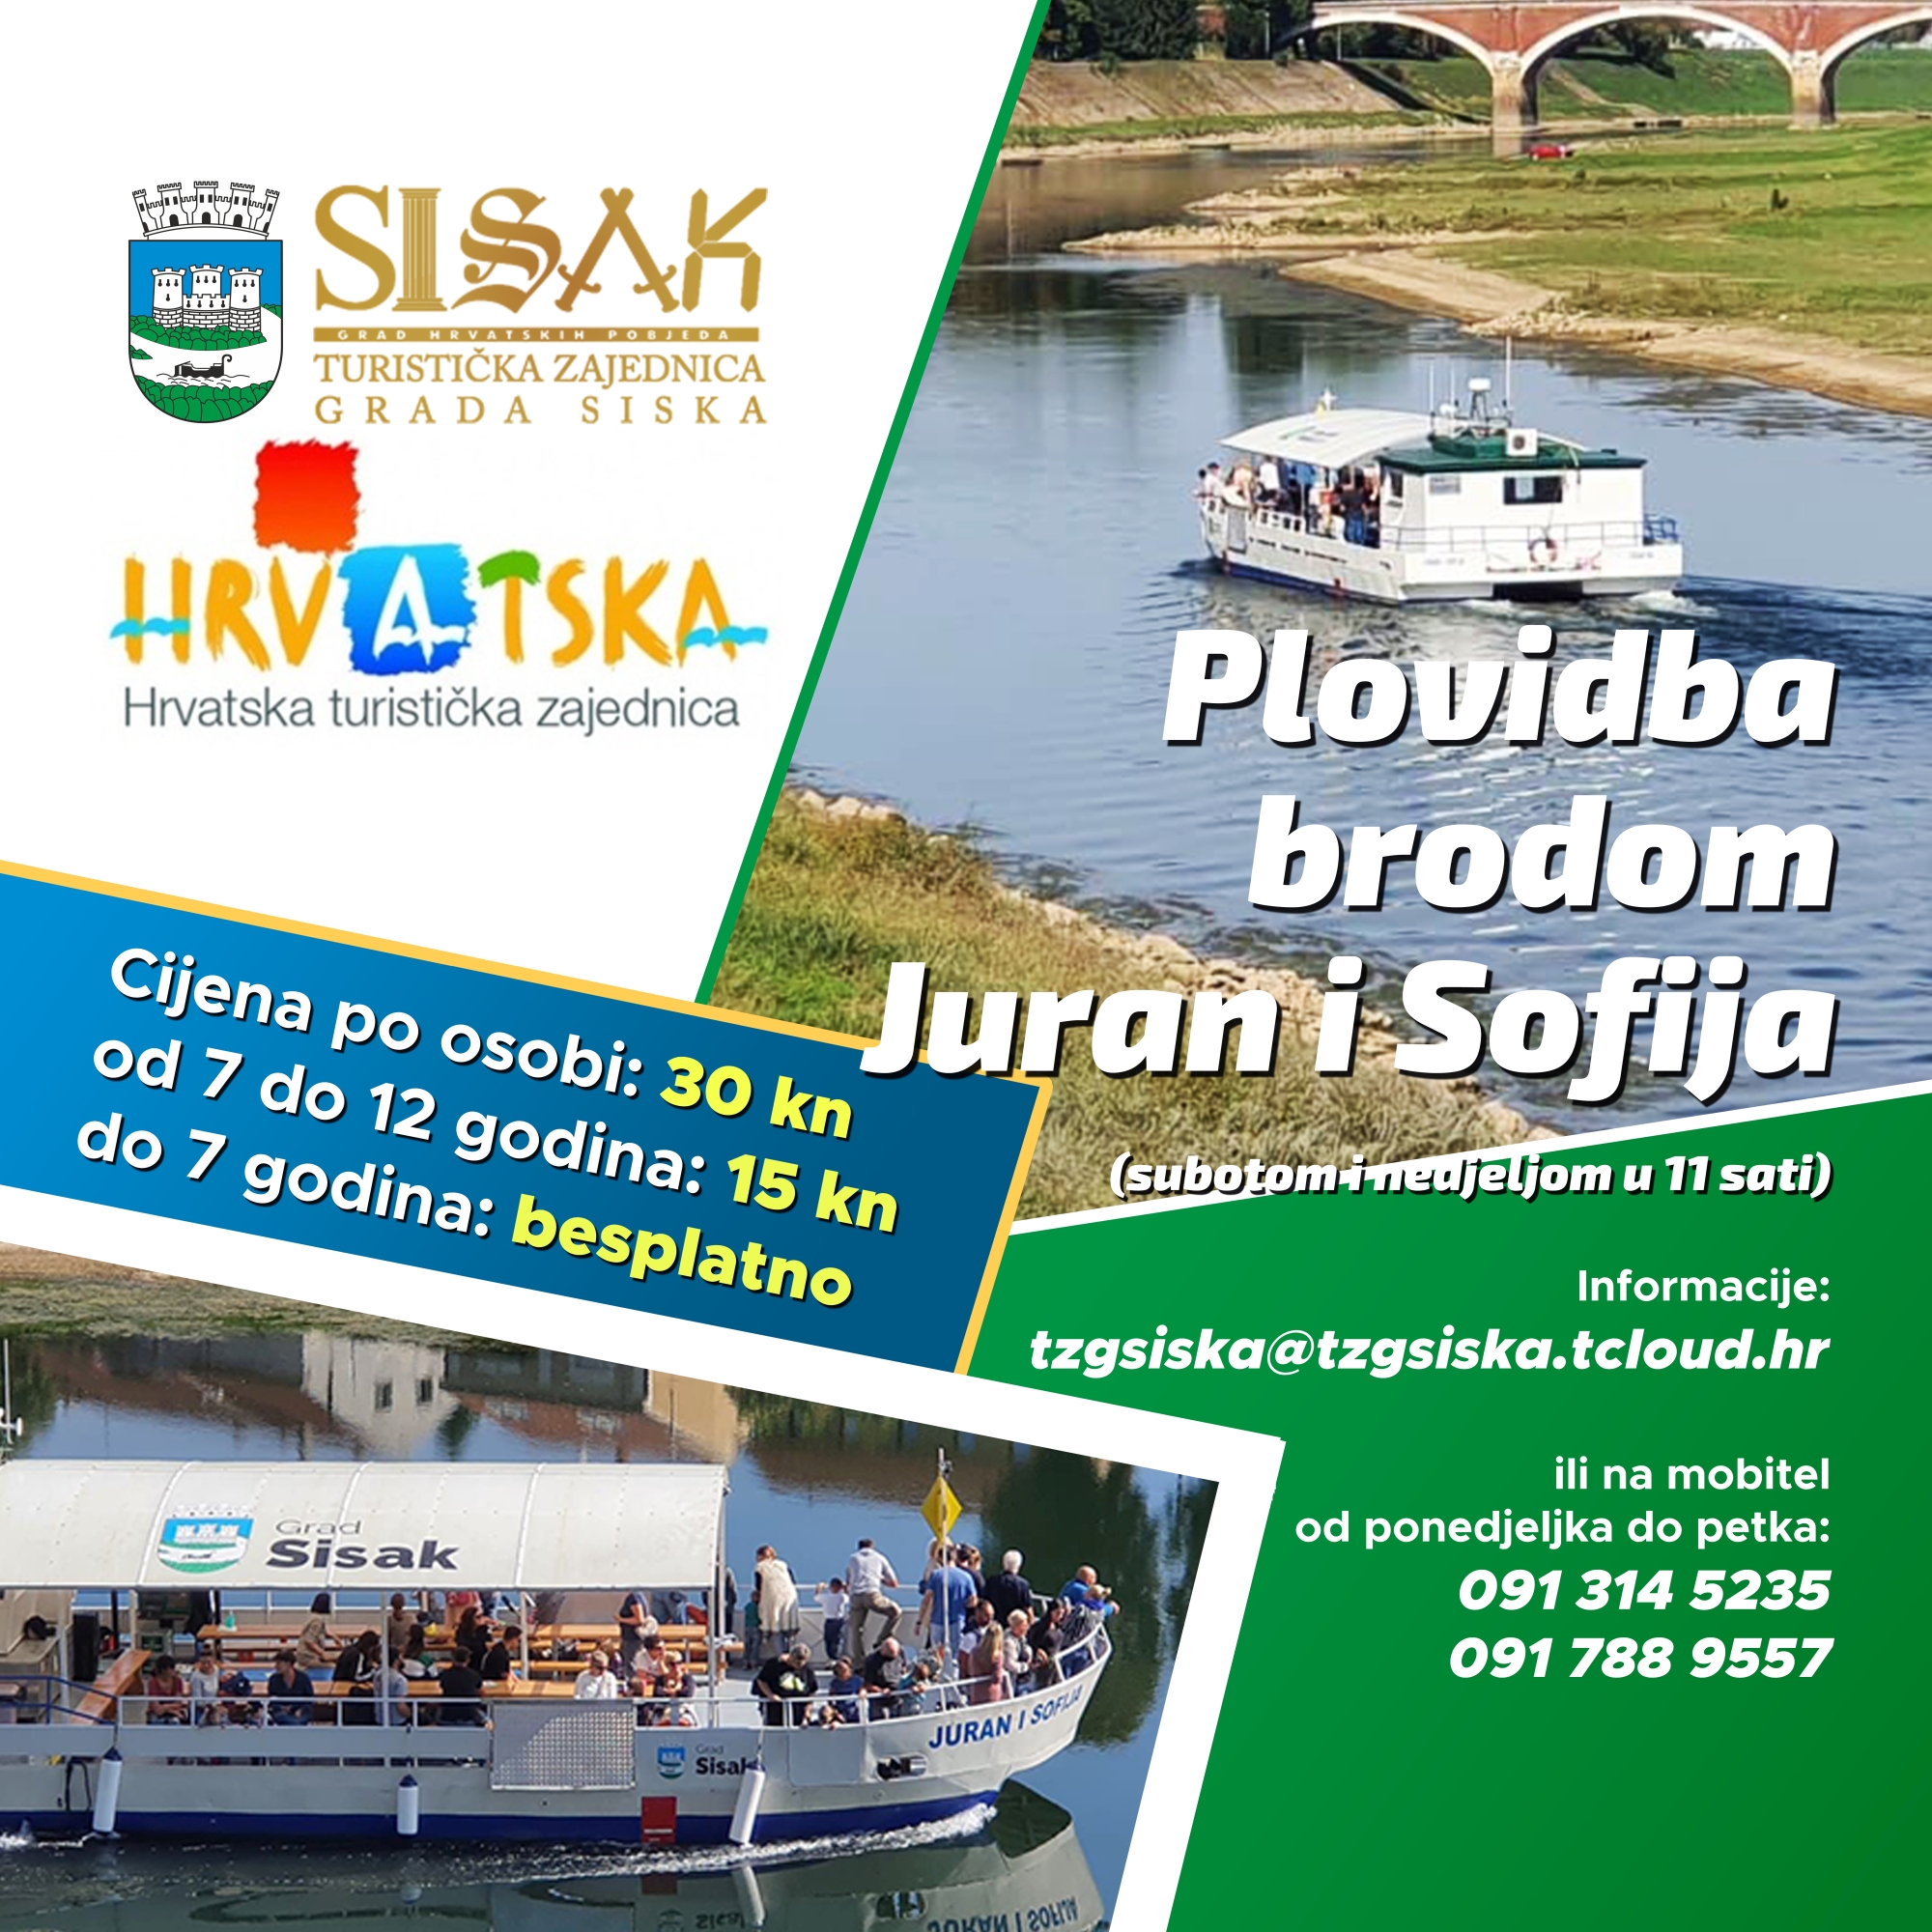 You are currently viewing Vožnja brodom Juran i Sofija